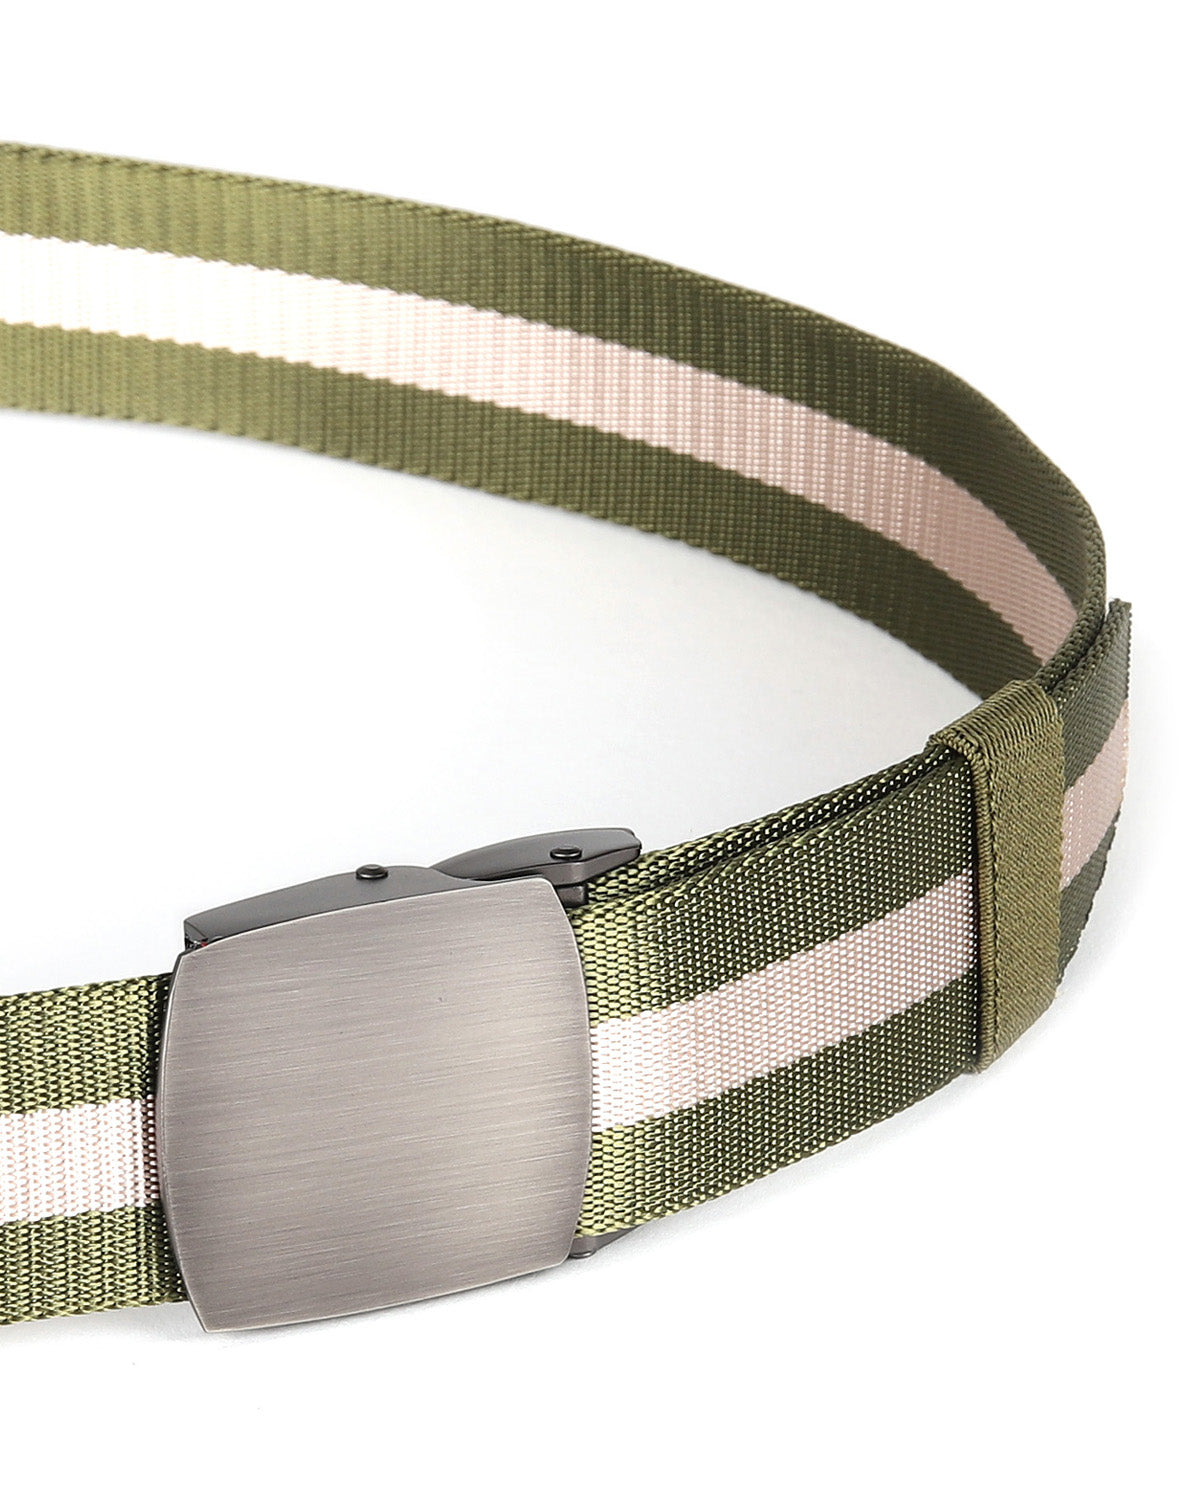 Men's One Size Adjustable Strap Stripe Nylon Web Belt With Metal Buckle